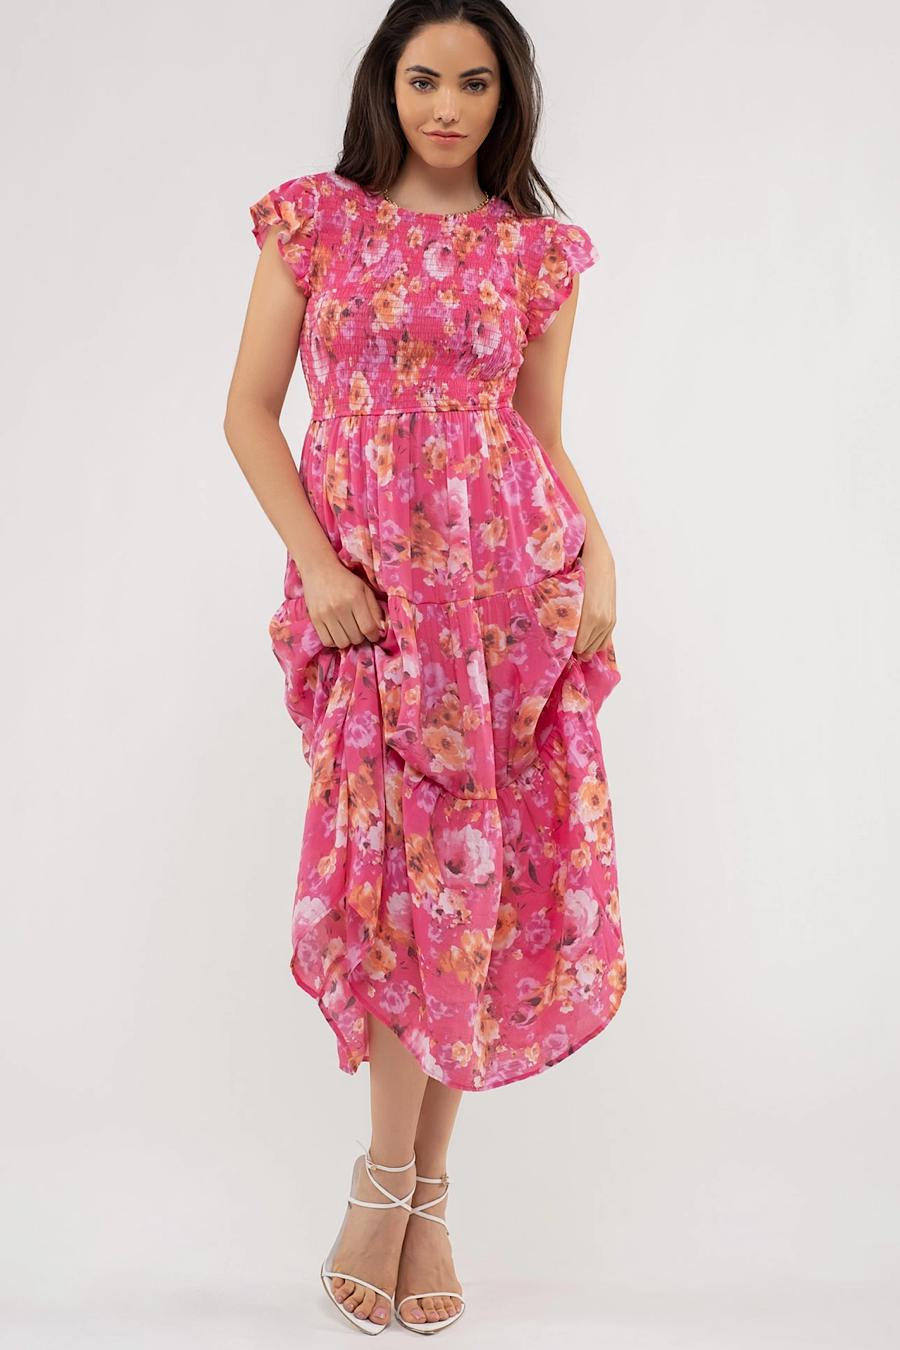 Floral Sienna Smocked Midi Dress